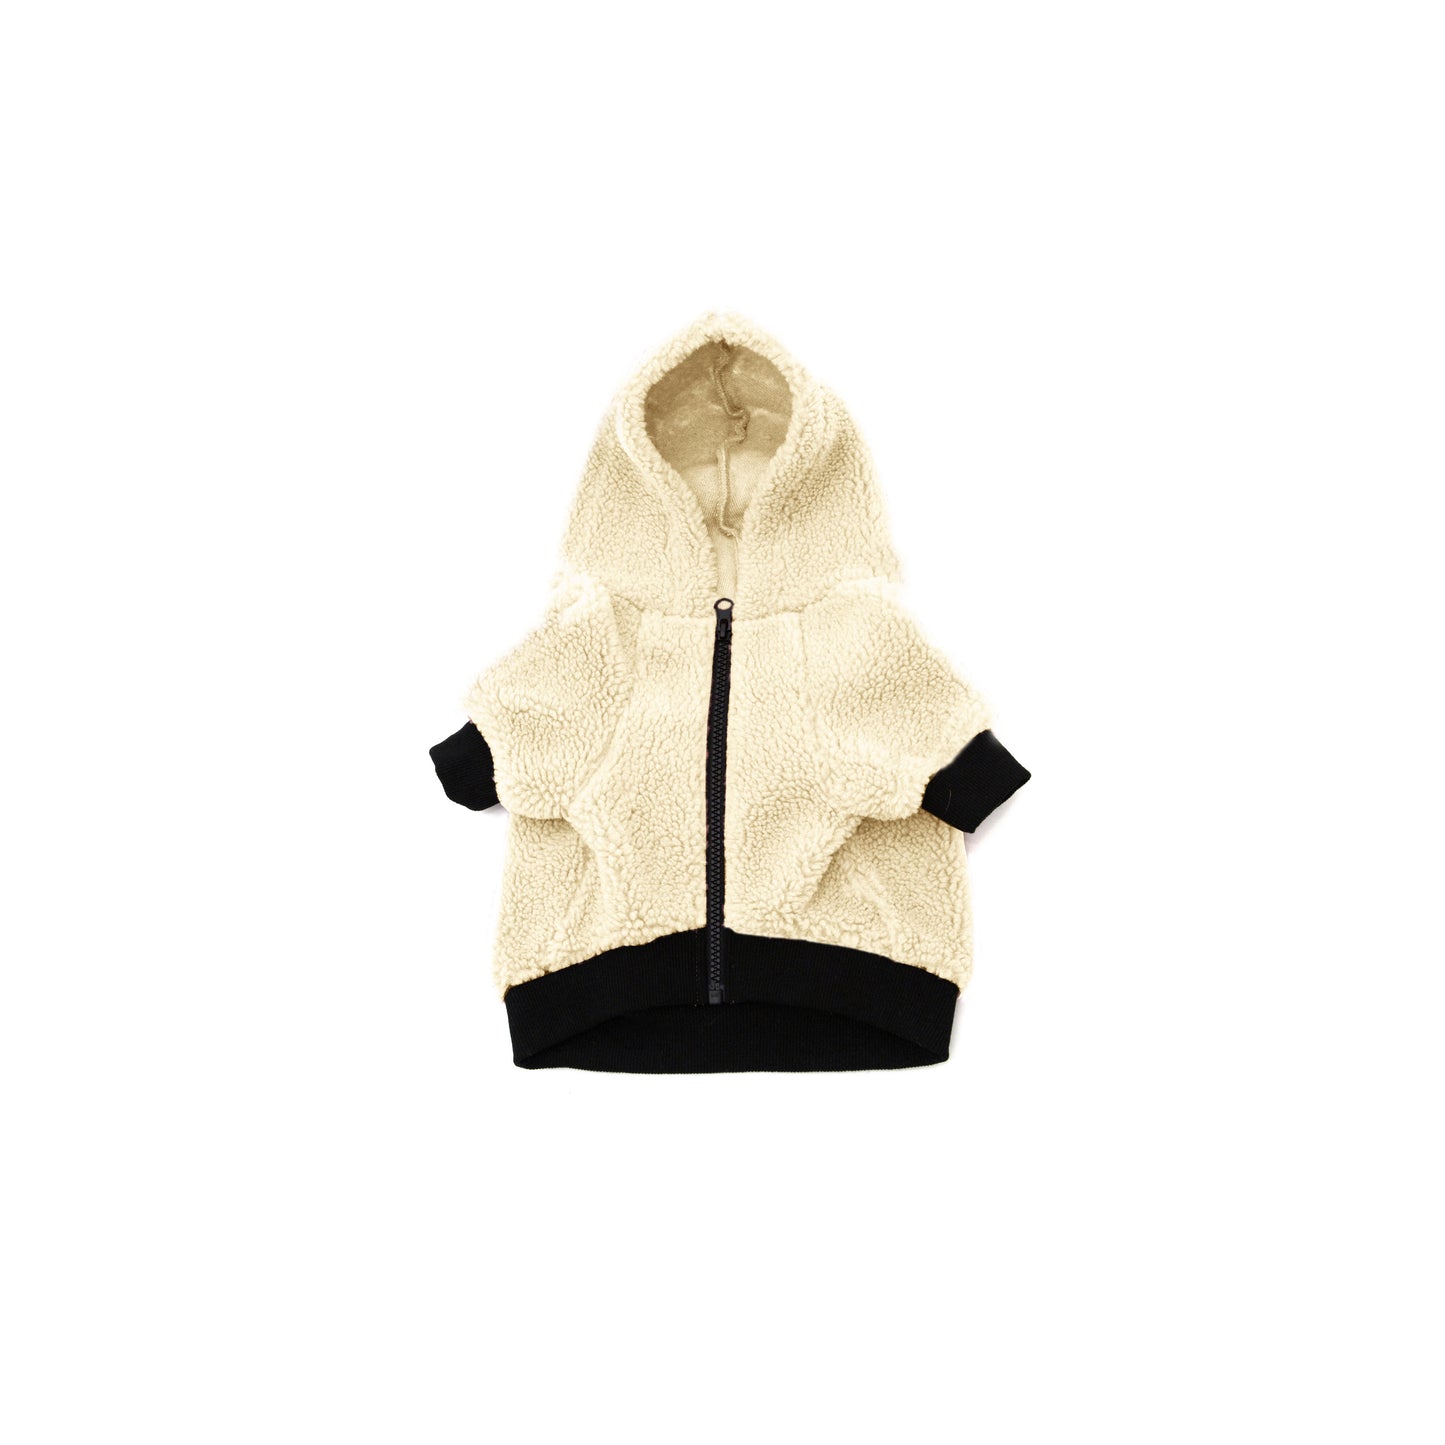 Cream off white sherpa pet dog jacket fleece coat